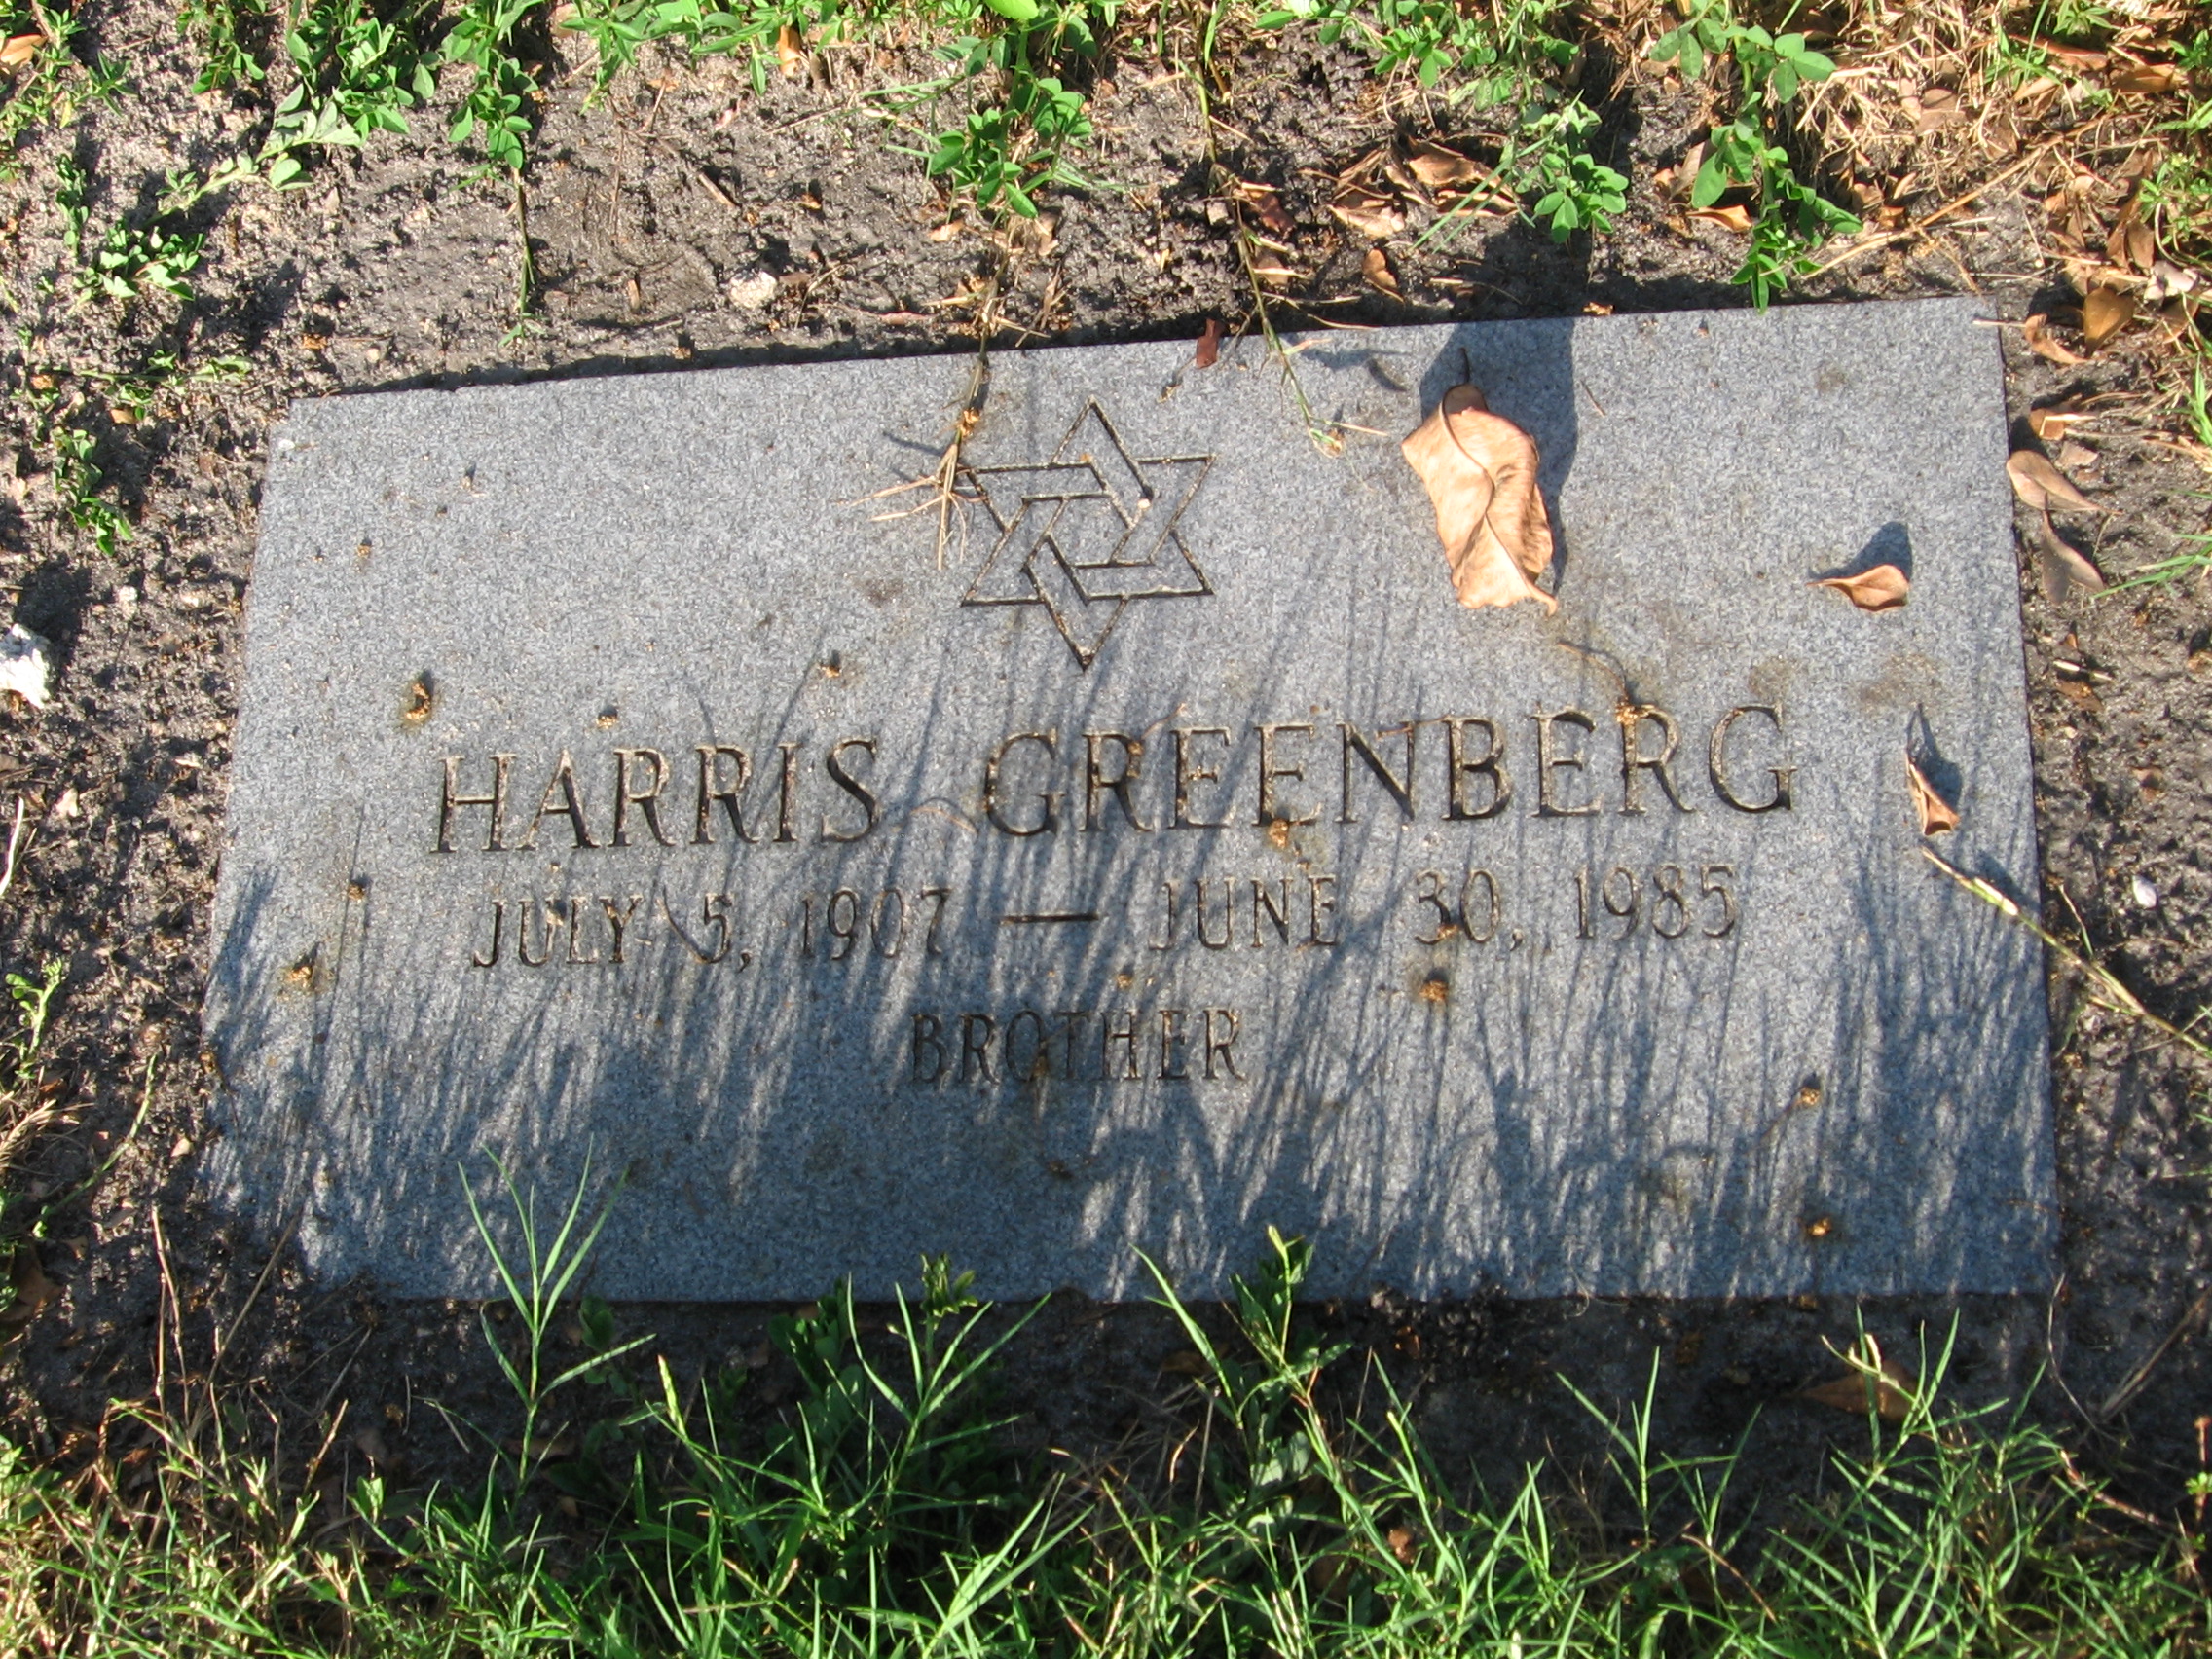 Harris Greenberg